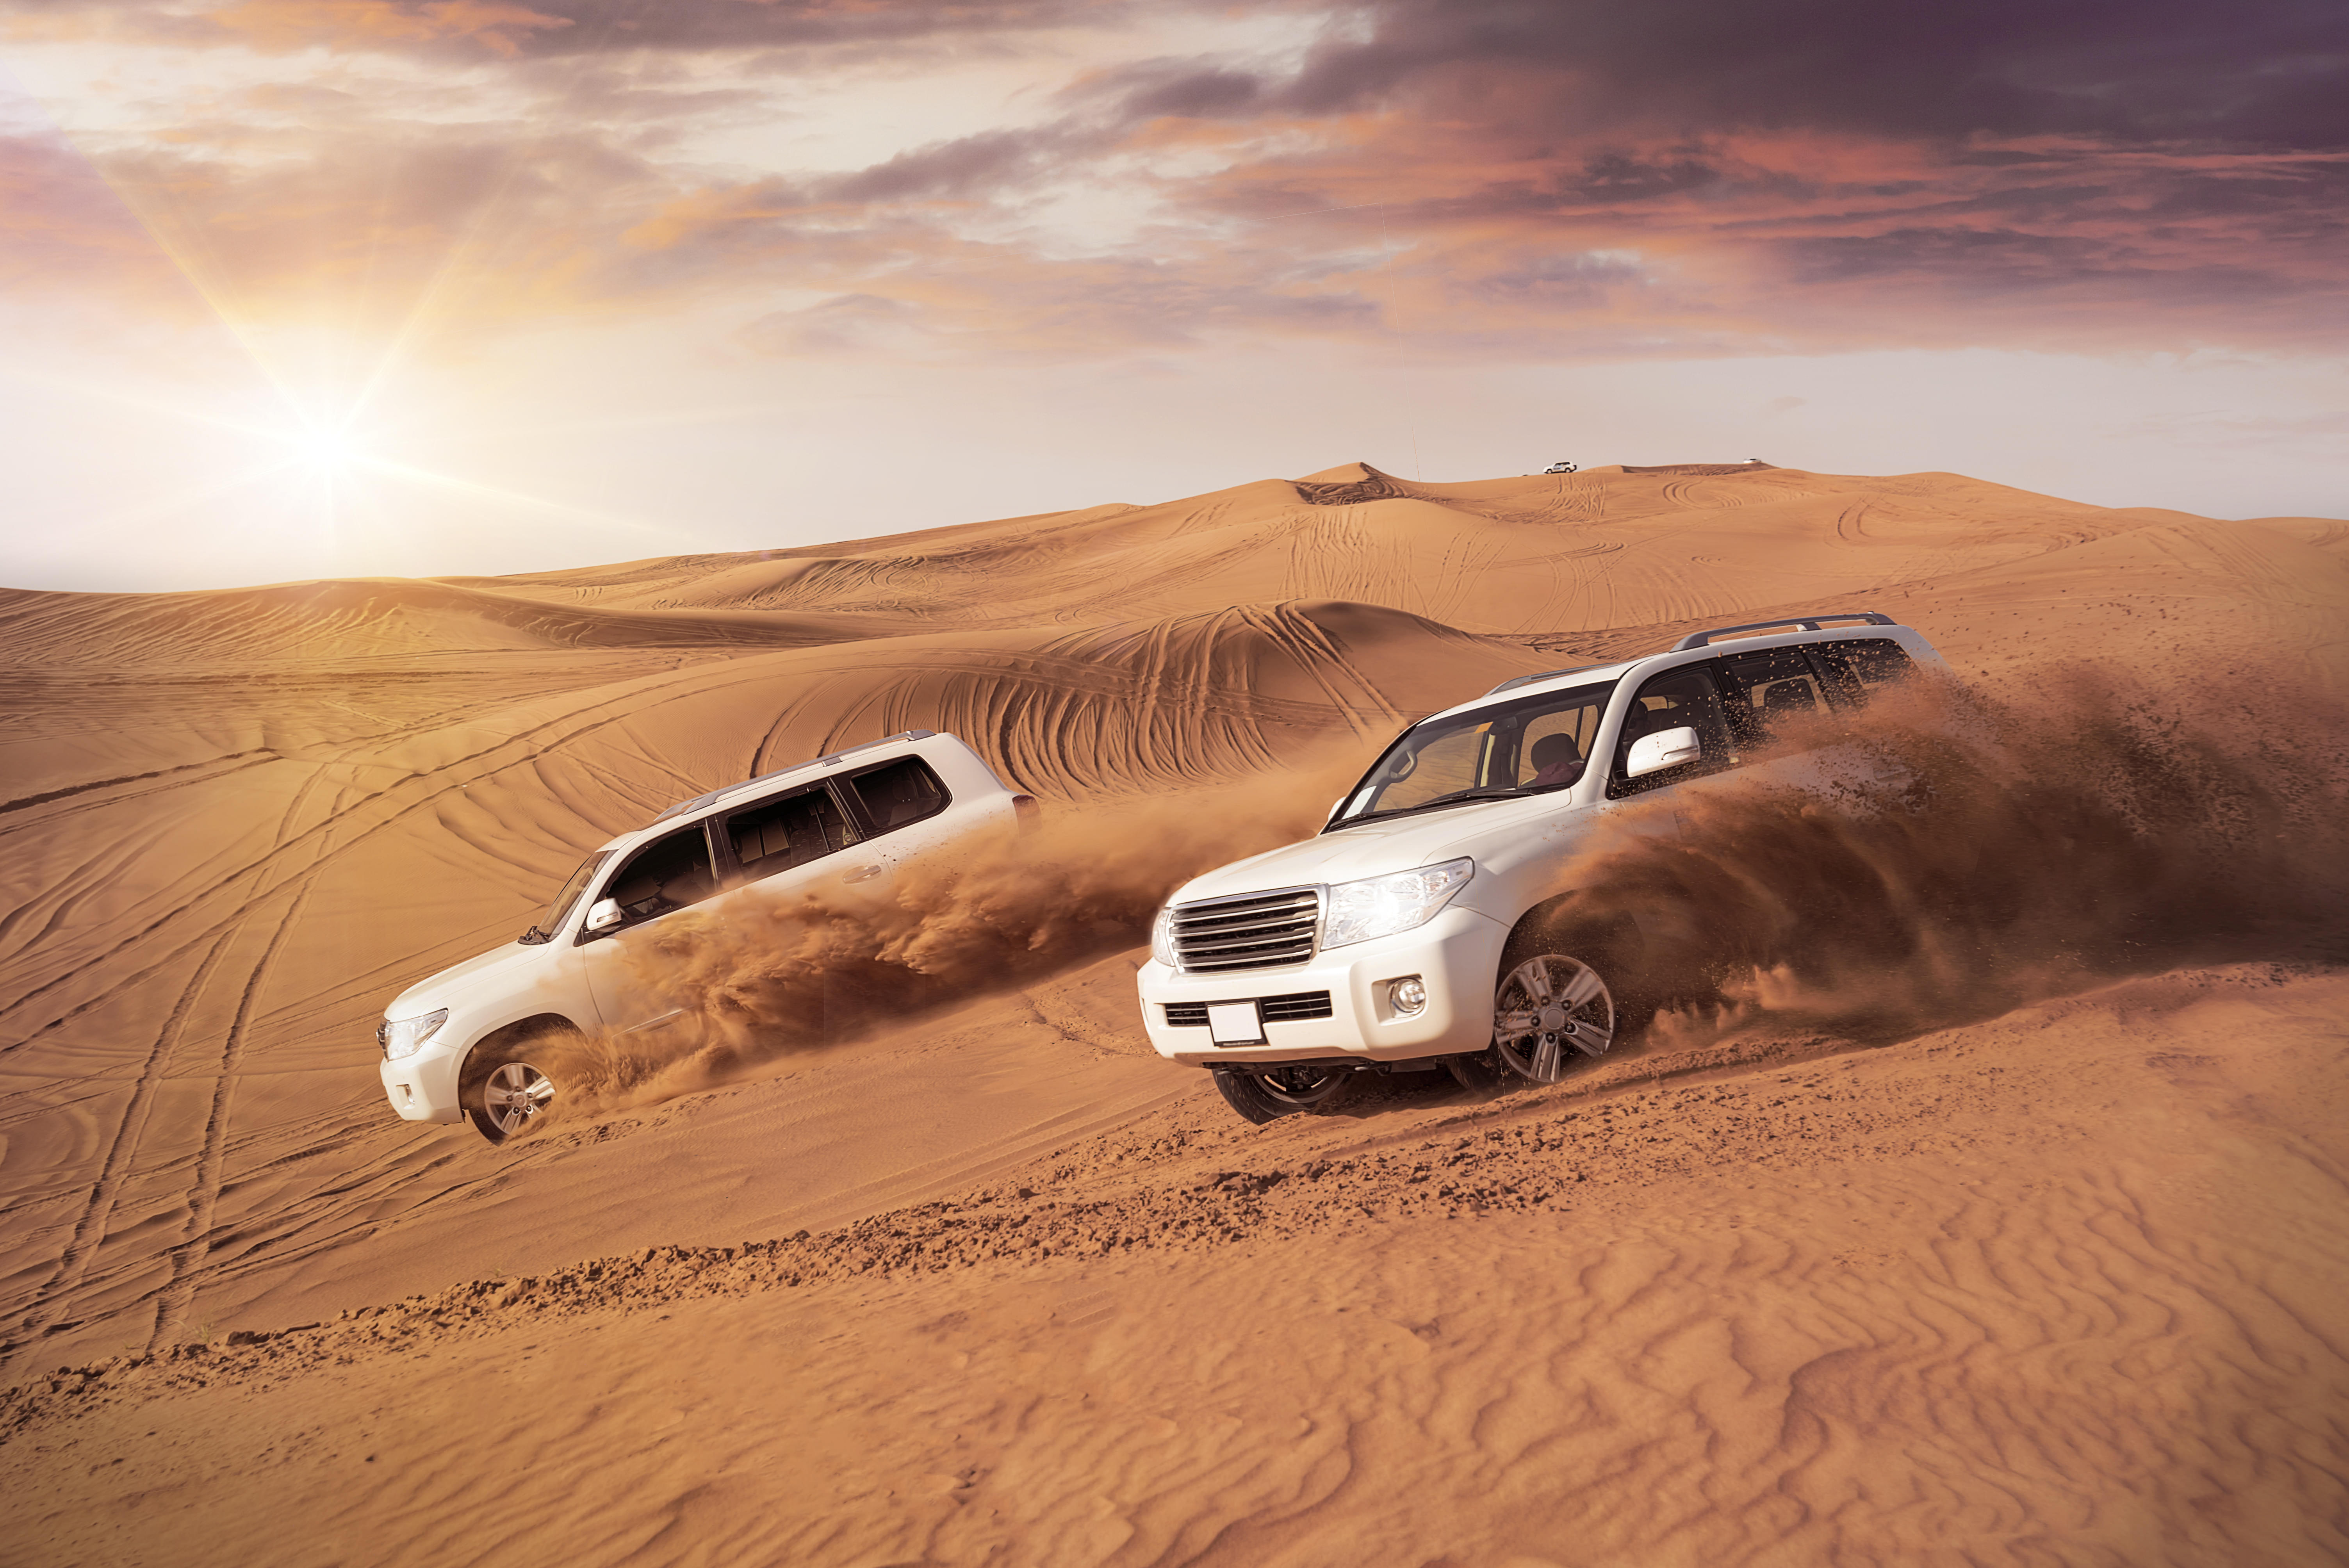 Hold on tight for an exhilarating ride through Dubai desert's golden sand dunes 